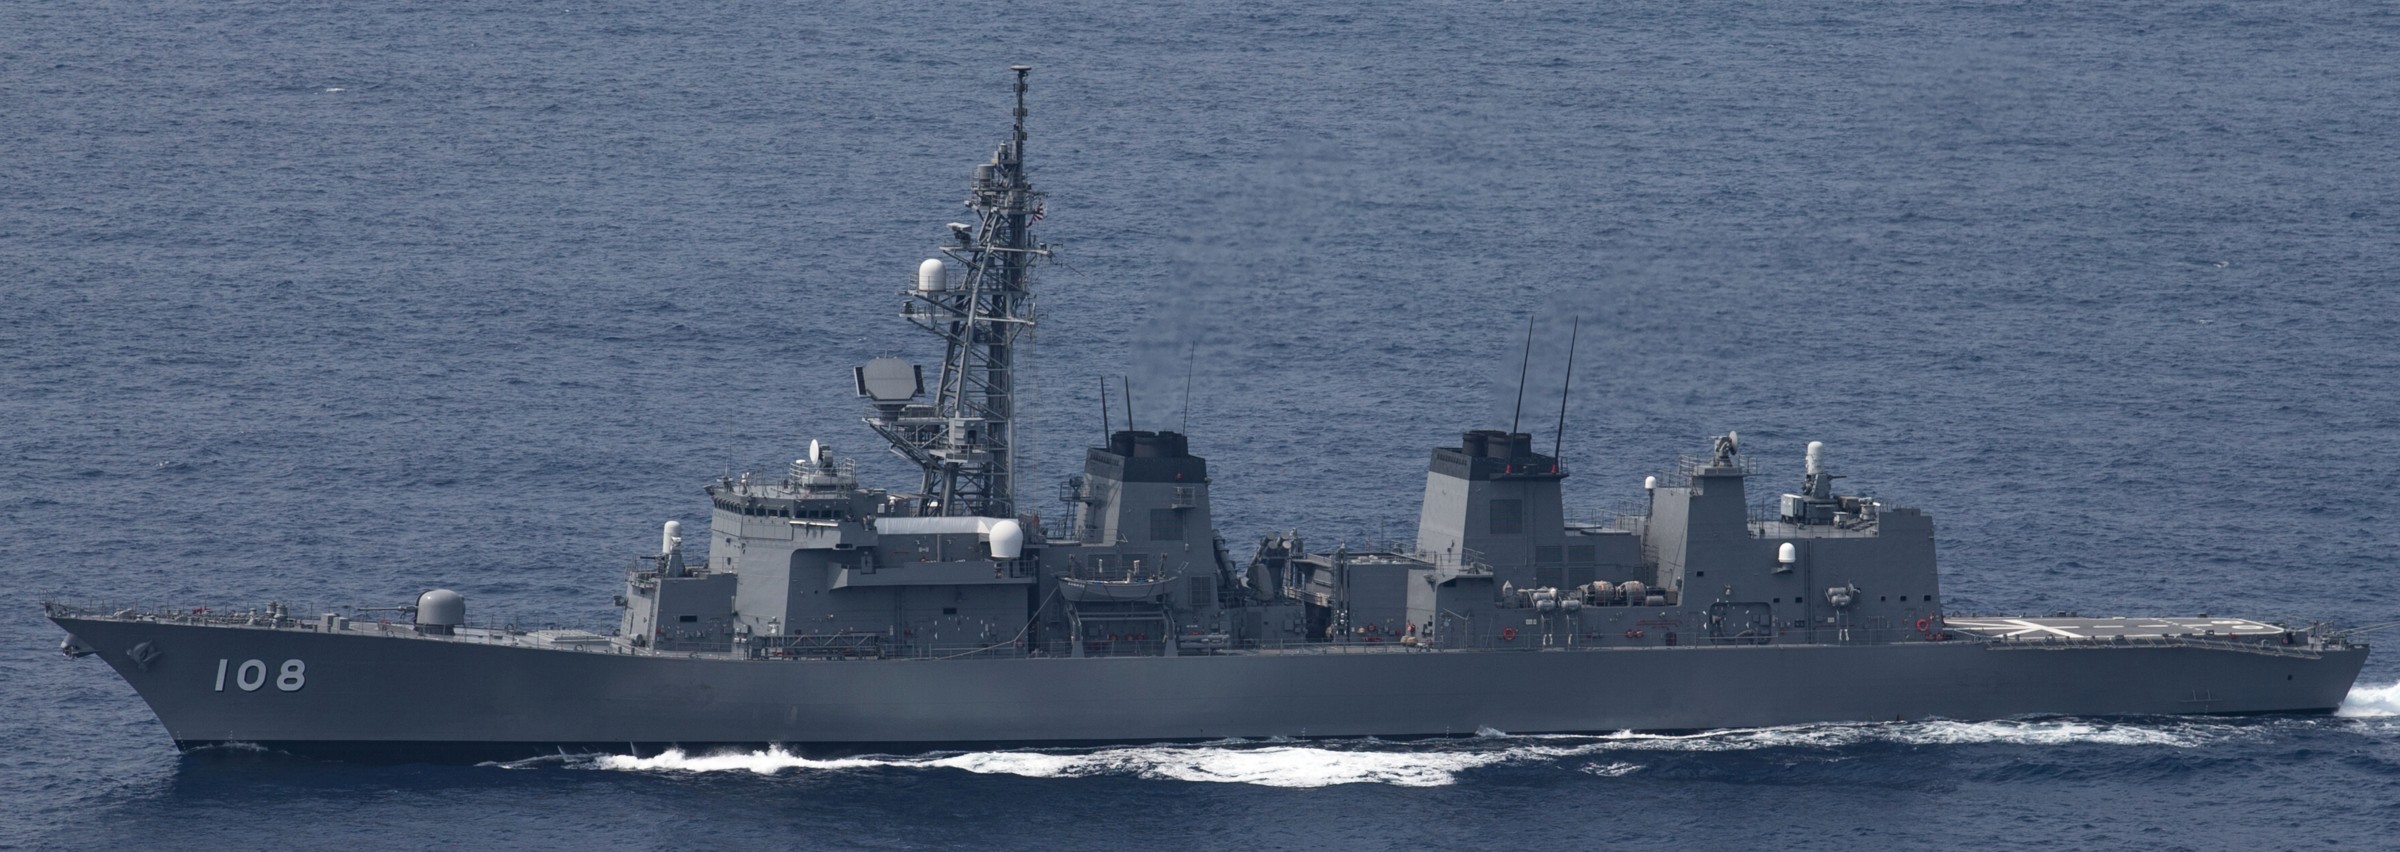 dd-108 js akebono murasame class destroyer japan maritime self defense force jmsdf 32